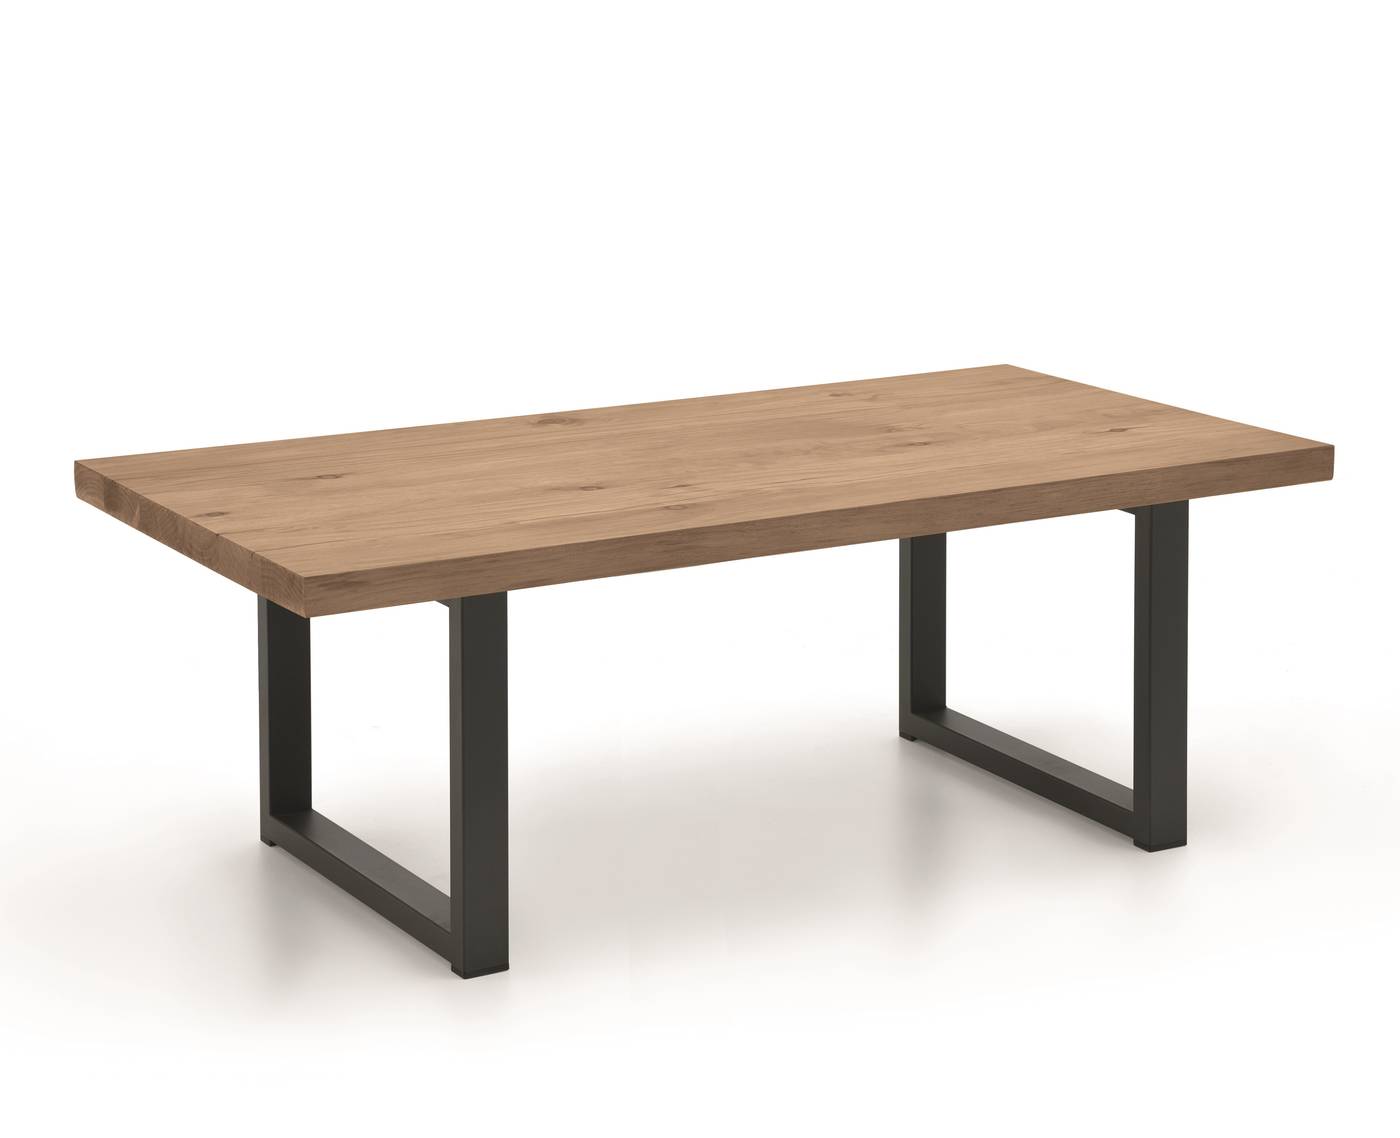 Mesa de centro rectangular, con patas metálicas color negro. Tablero de madera maciza o chapado en varios colores.